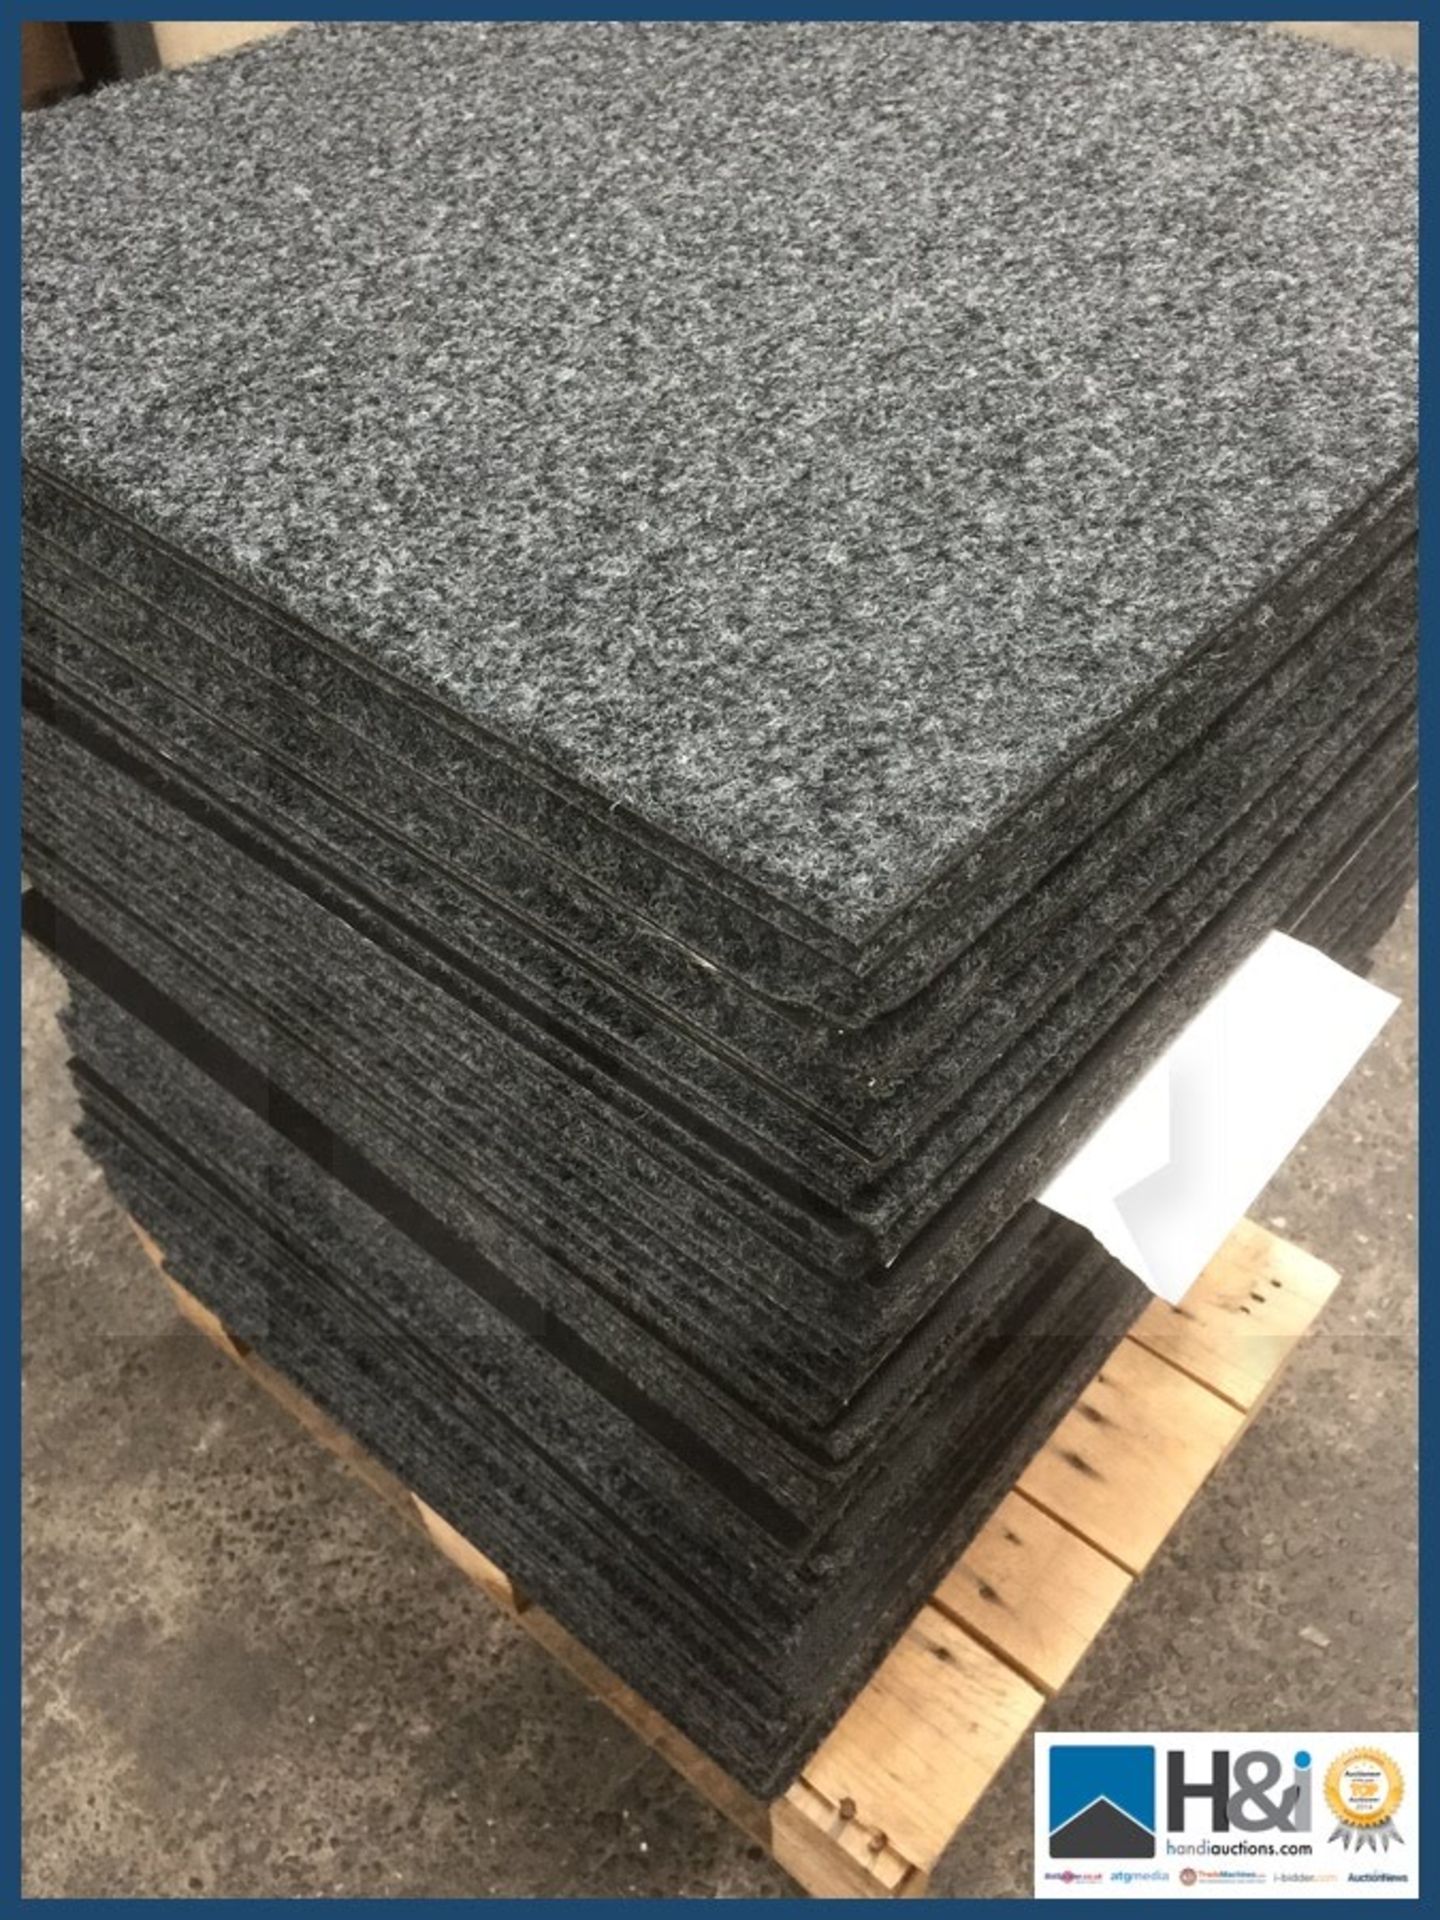 Burmatex contract carpet tiles. Design:Rialto. Colour:Charcoal Grey. 80 tiles total 20m2. RRP GBP 40 - Image 2 of 4